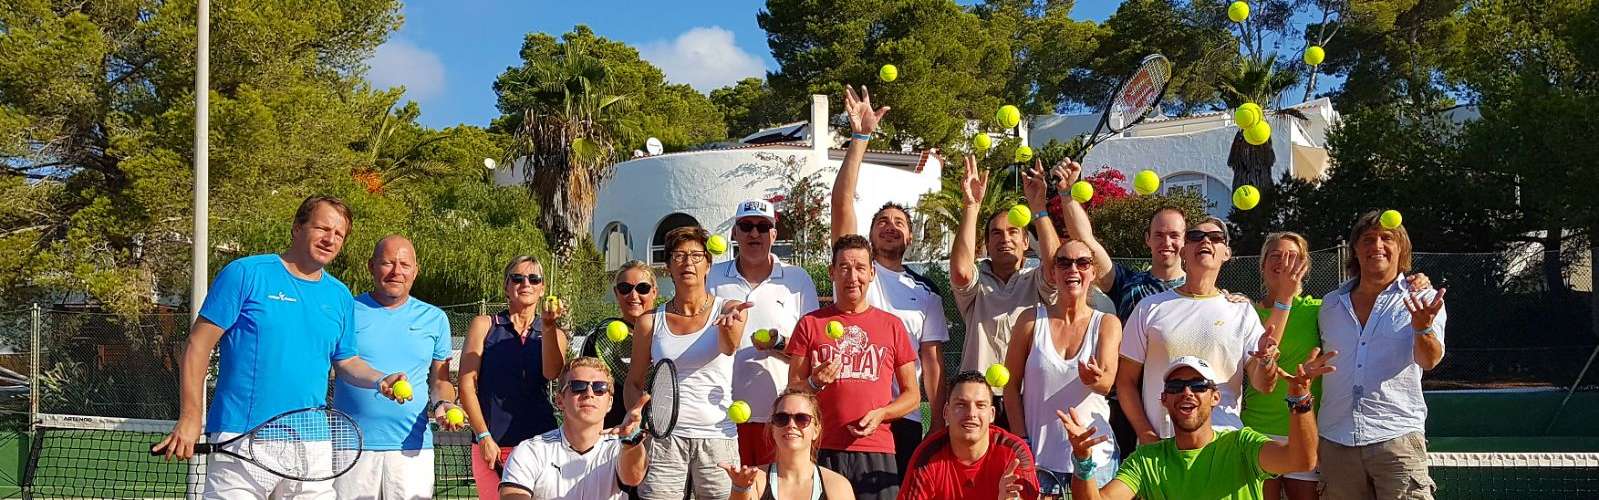 Singlereis Tennis Cyprus